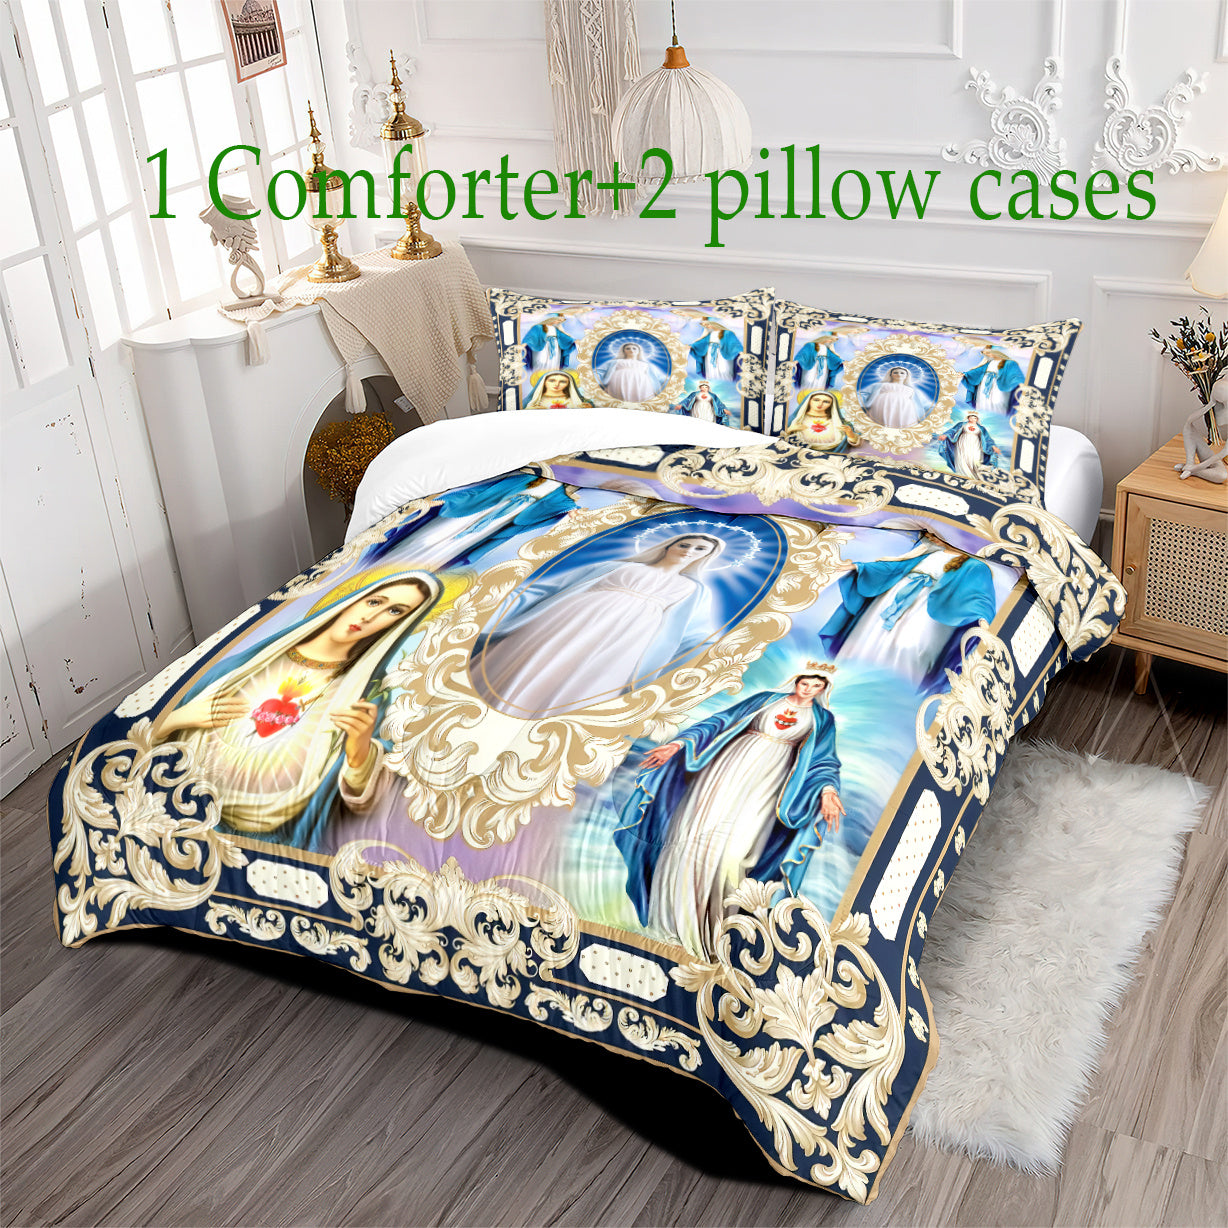 3pcs Virgin Print Comforter Set, Soft Comfortable Skin-friendly Bedding Set, For Bedroom Guest Room Dorm, All Season Home Decor (1*Comforter + 2*Pillowcase, Without Core)